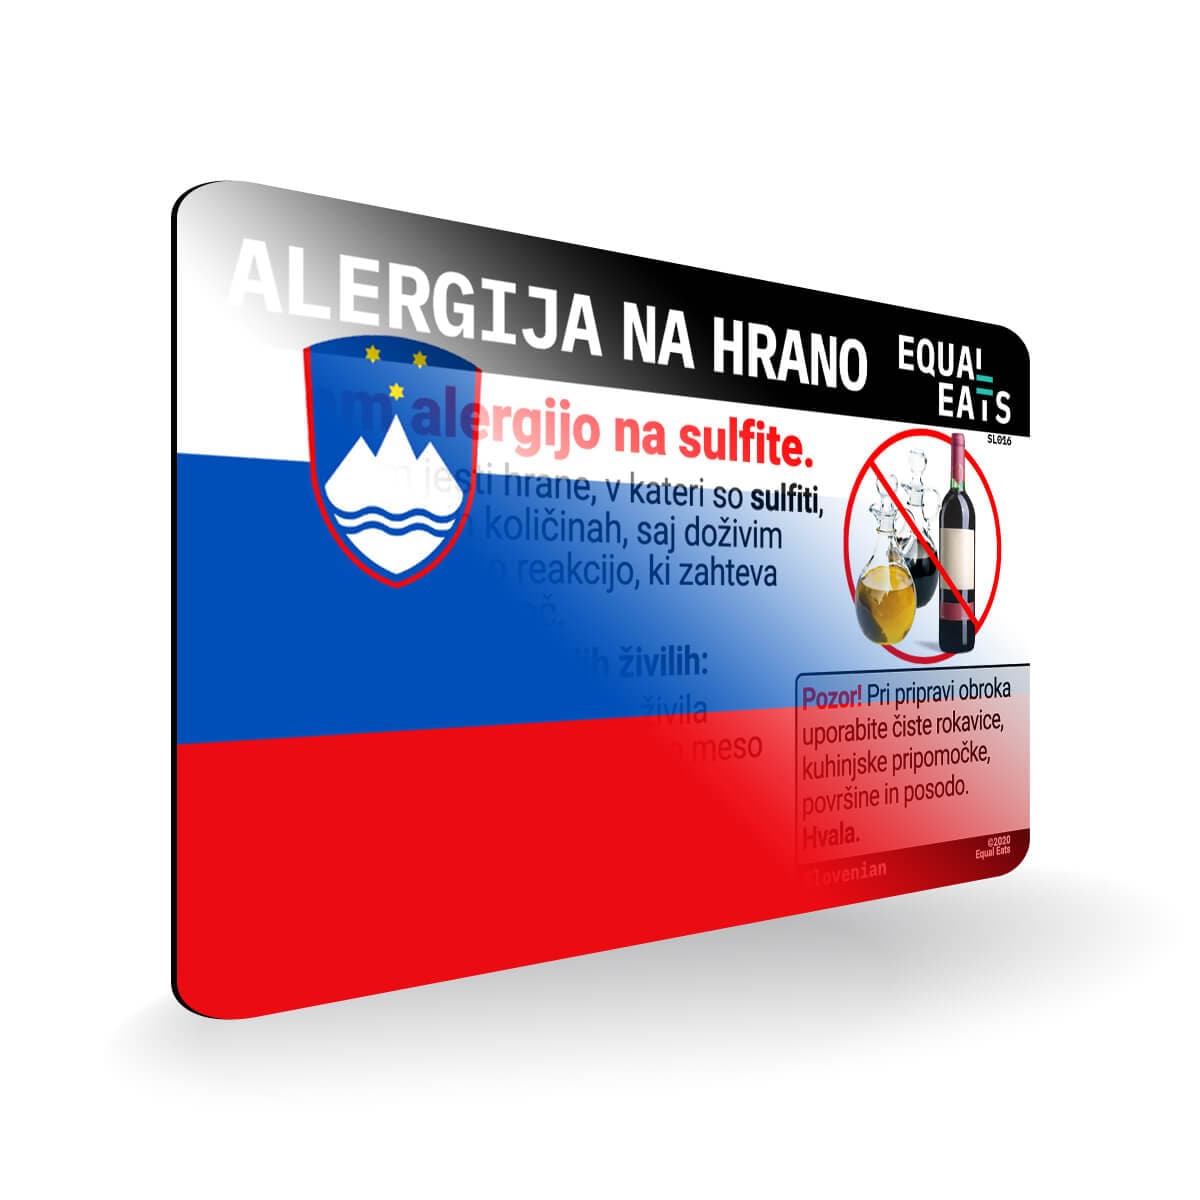 Sulfite Allergy in Slovenian. Sulfite Allergy Card for Slovenia